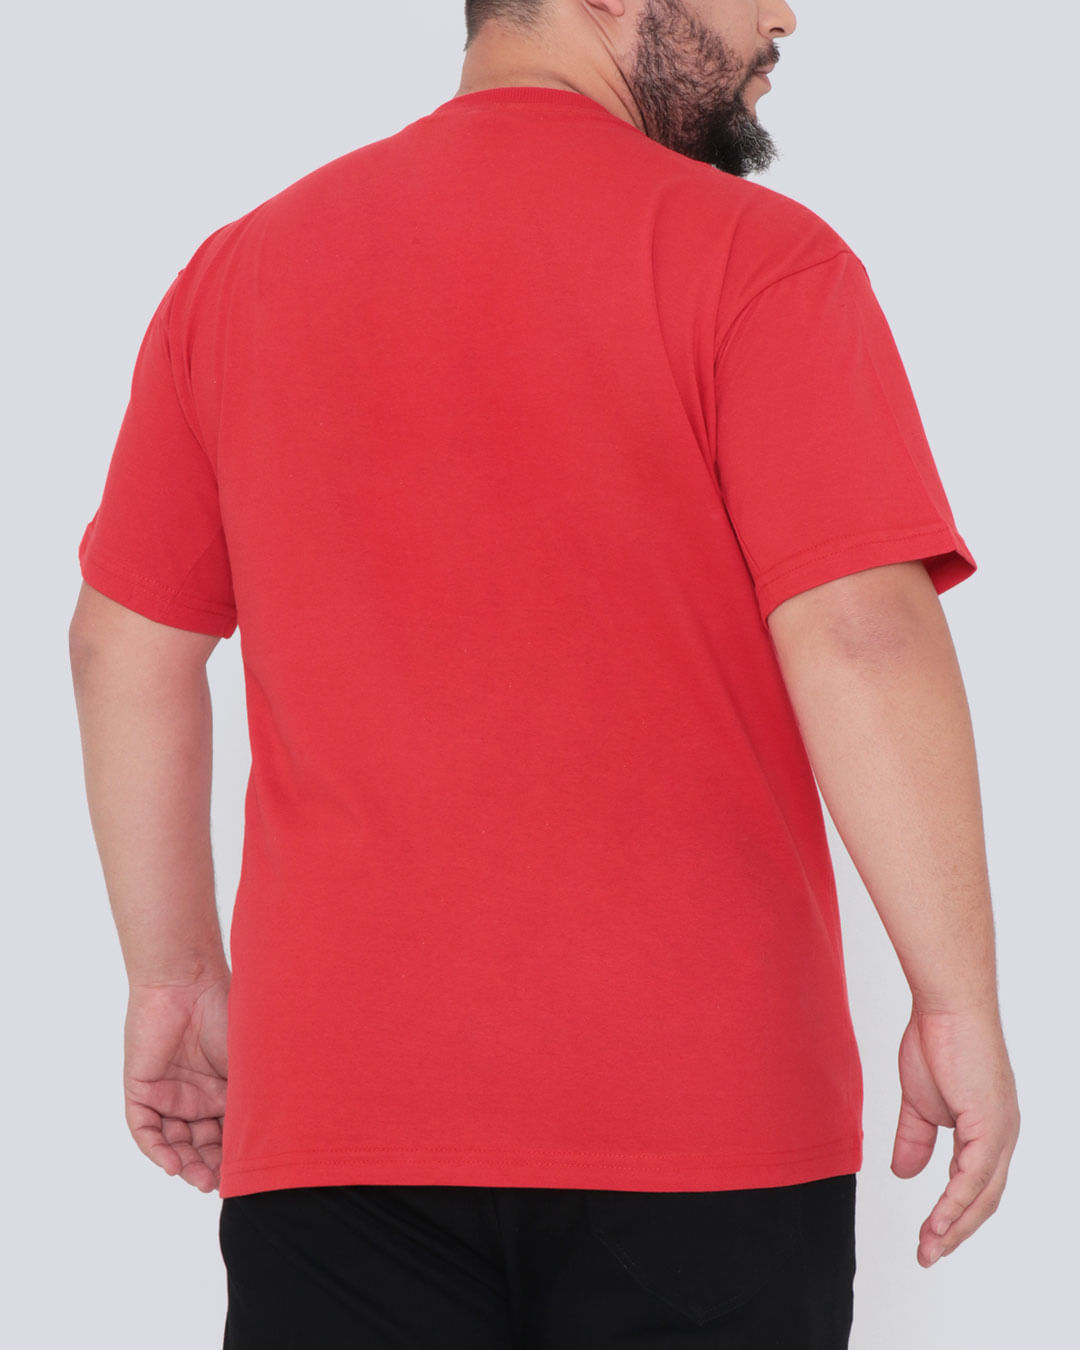 Camiseta-Plus-Size-Manga-Curta-Ecko-Vermelha